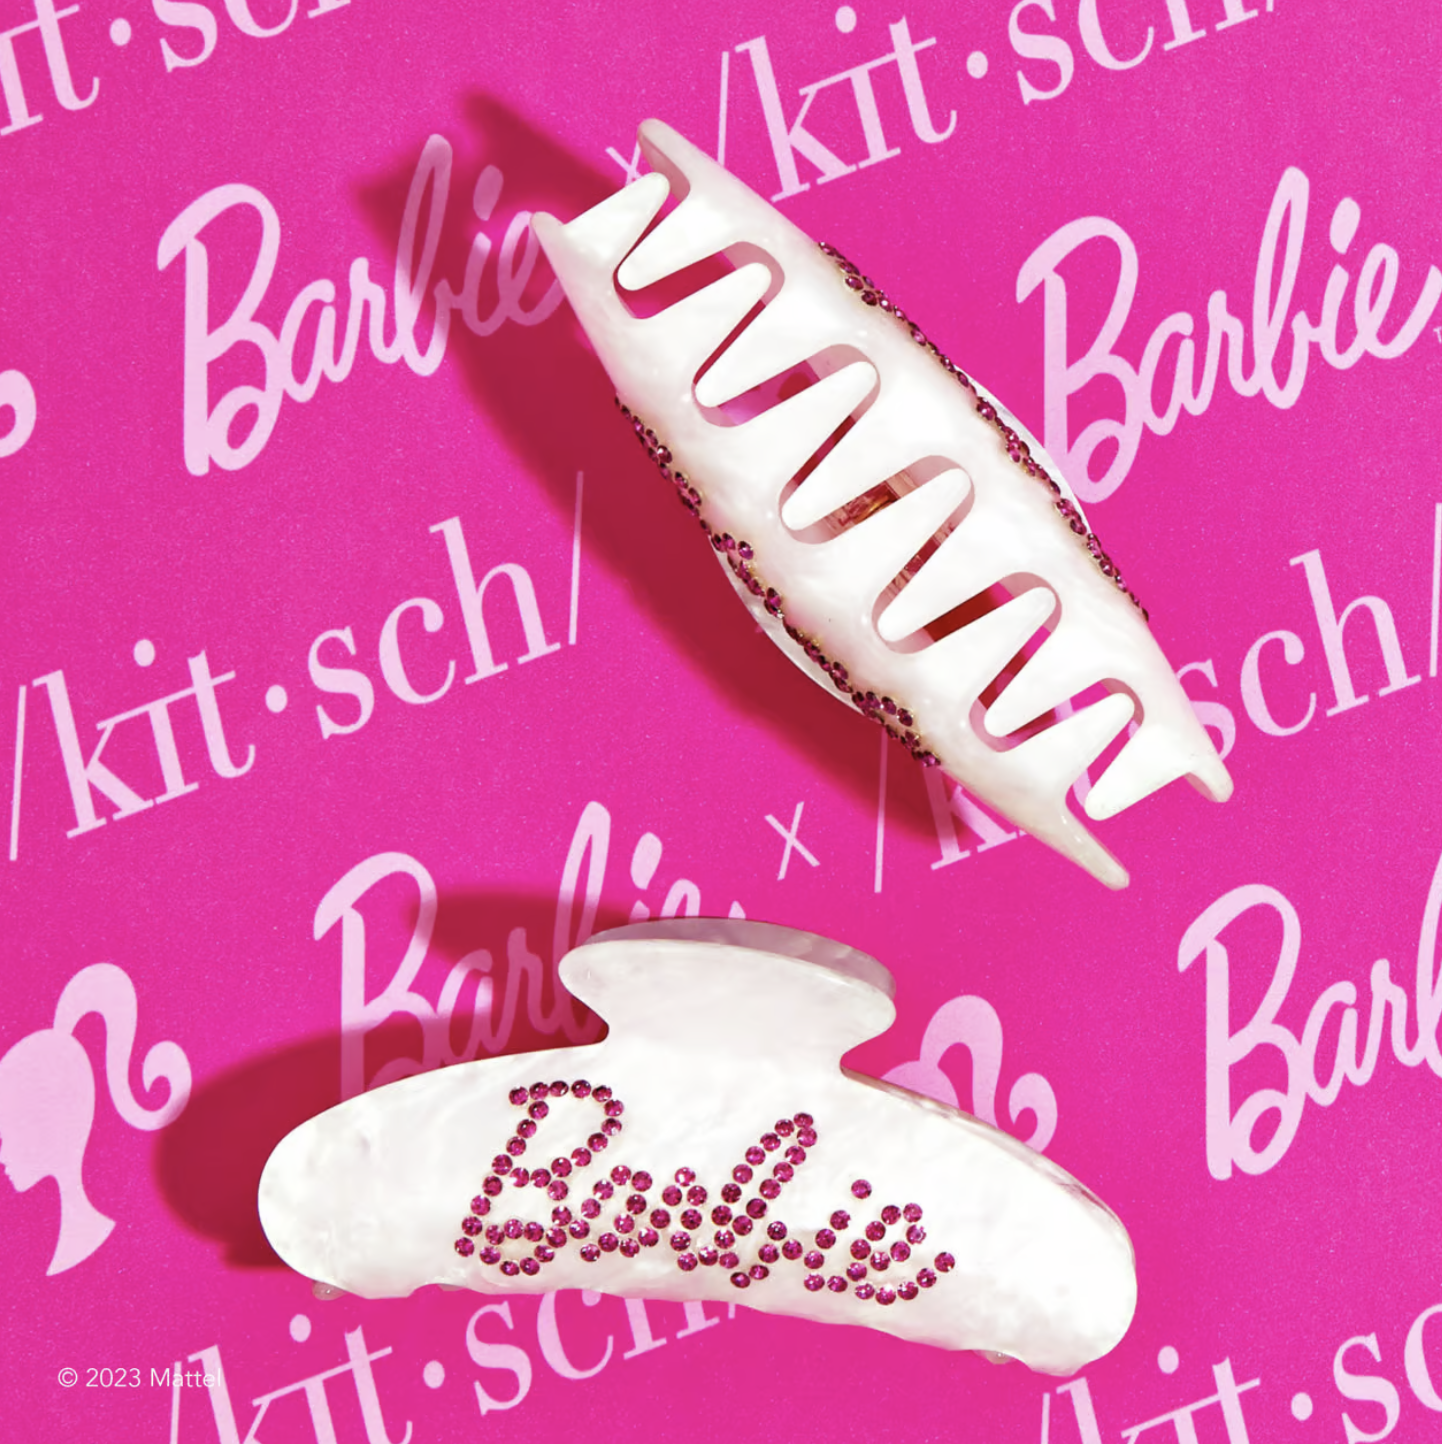 Barbie Bling Hair Clip by Barbie™ x KITSCH